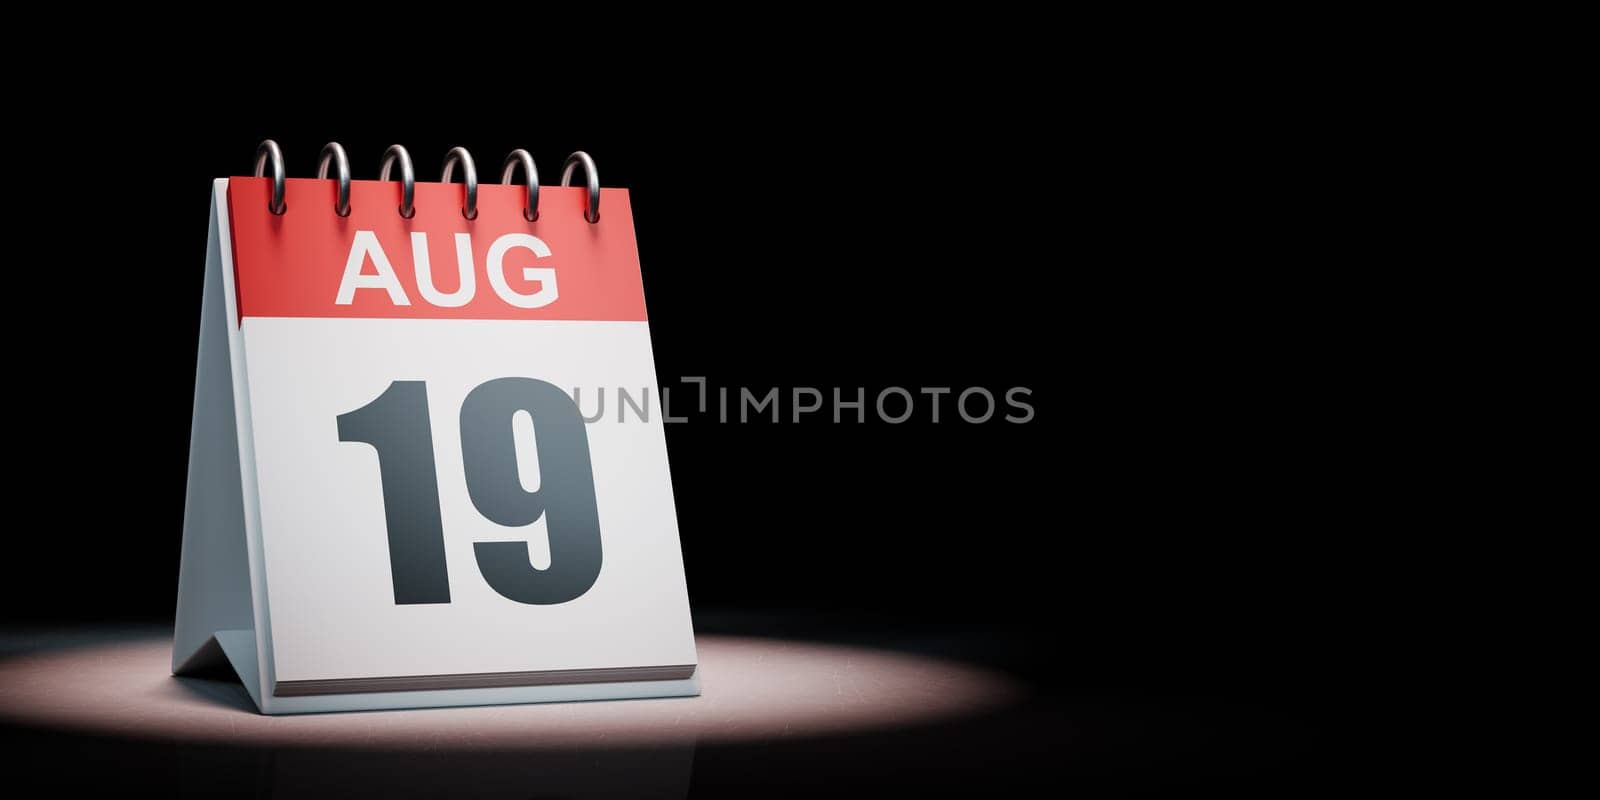 August 19 Calendar Spotlighted on Black Background by make